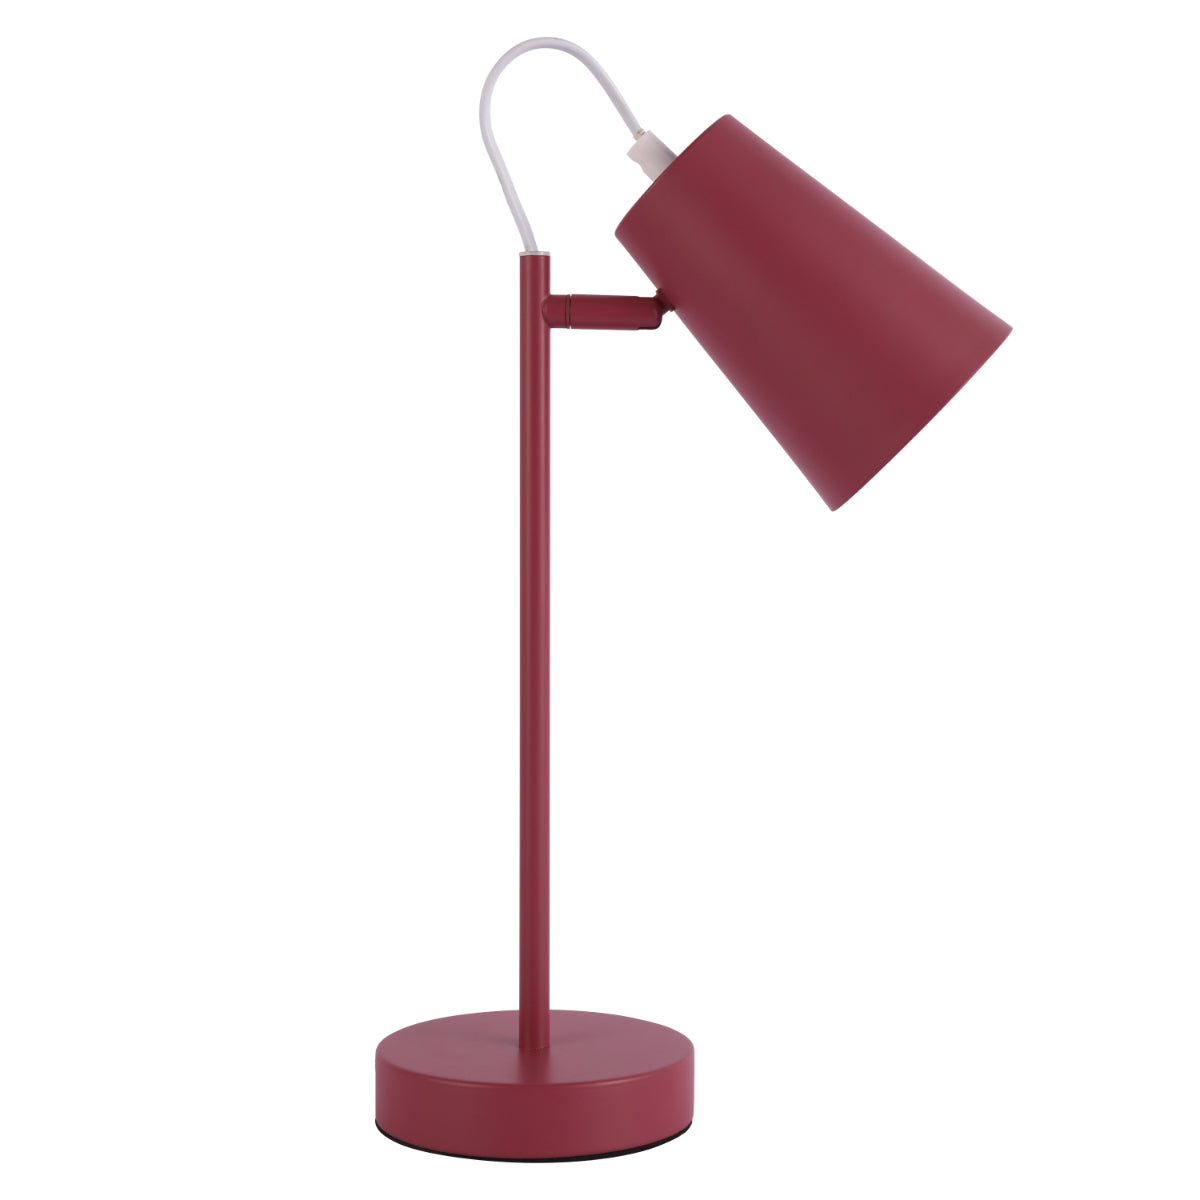 Main image of Sleek Cut Cone Desk Lamp in Vibrant Colors - Modern Elegance 130-03672